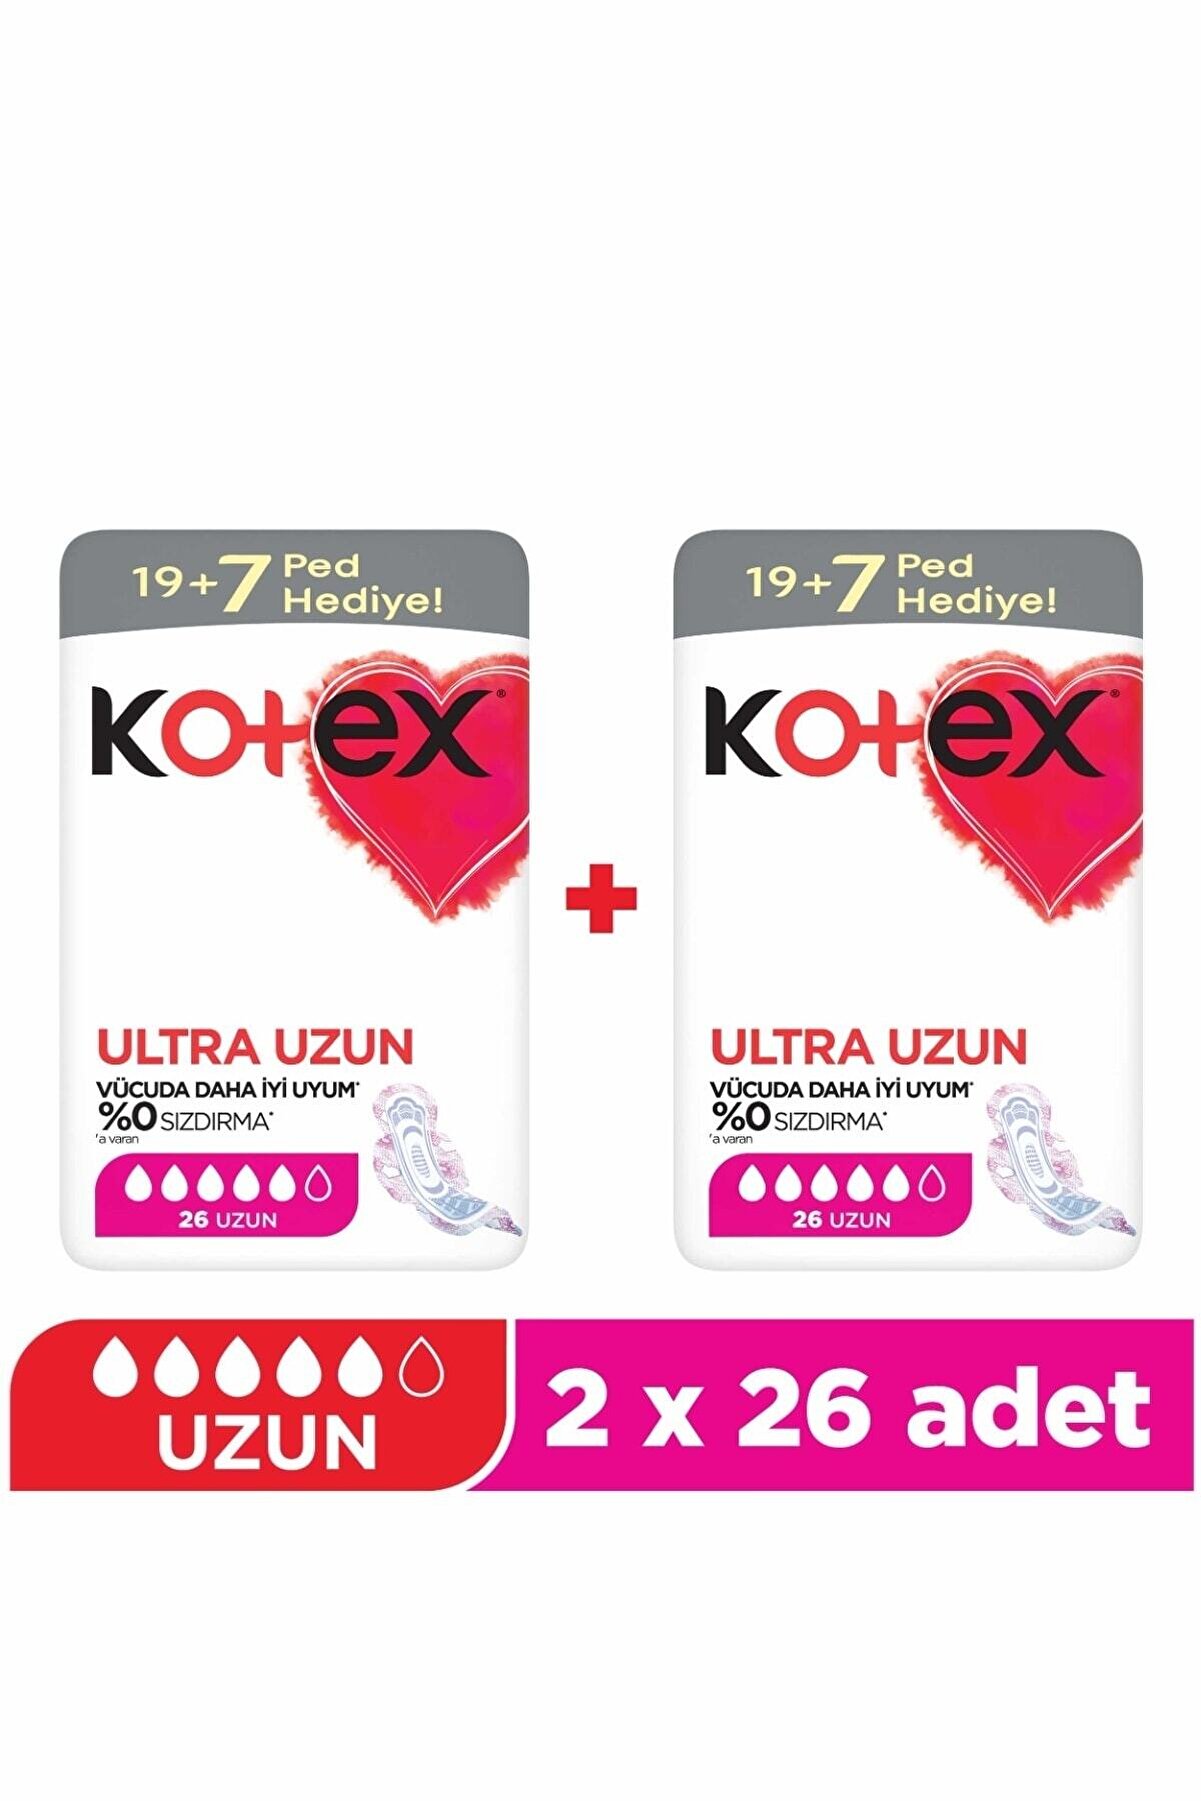 Kotex Ped Ultra Dev Ekonomik Uzun 26'lı x2